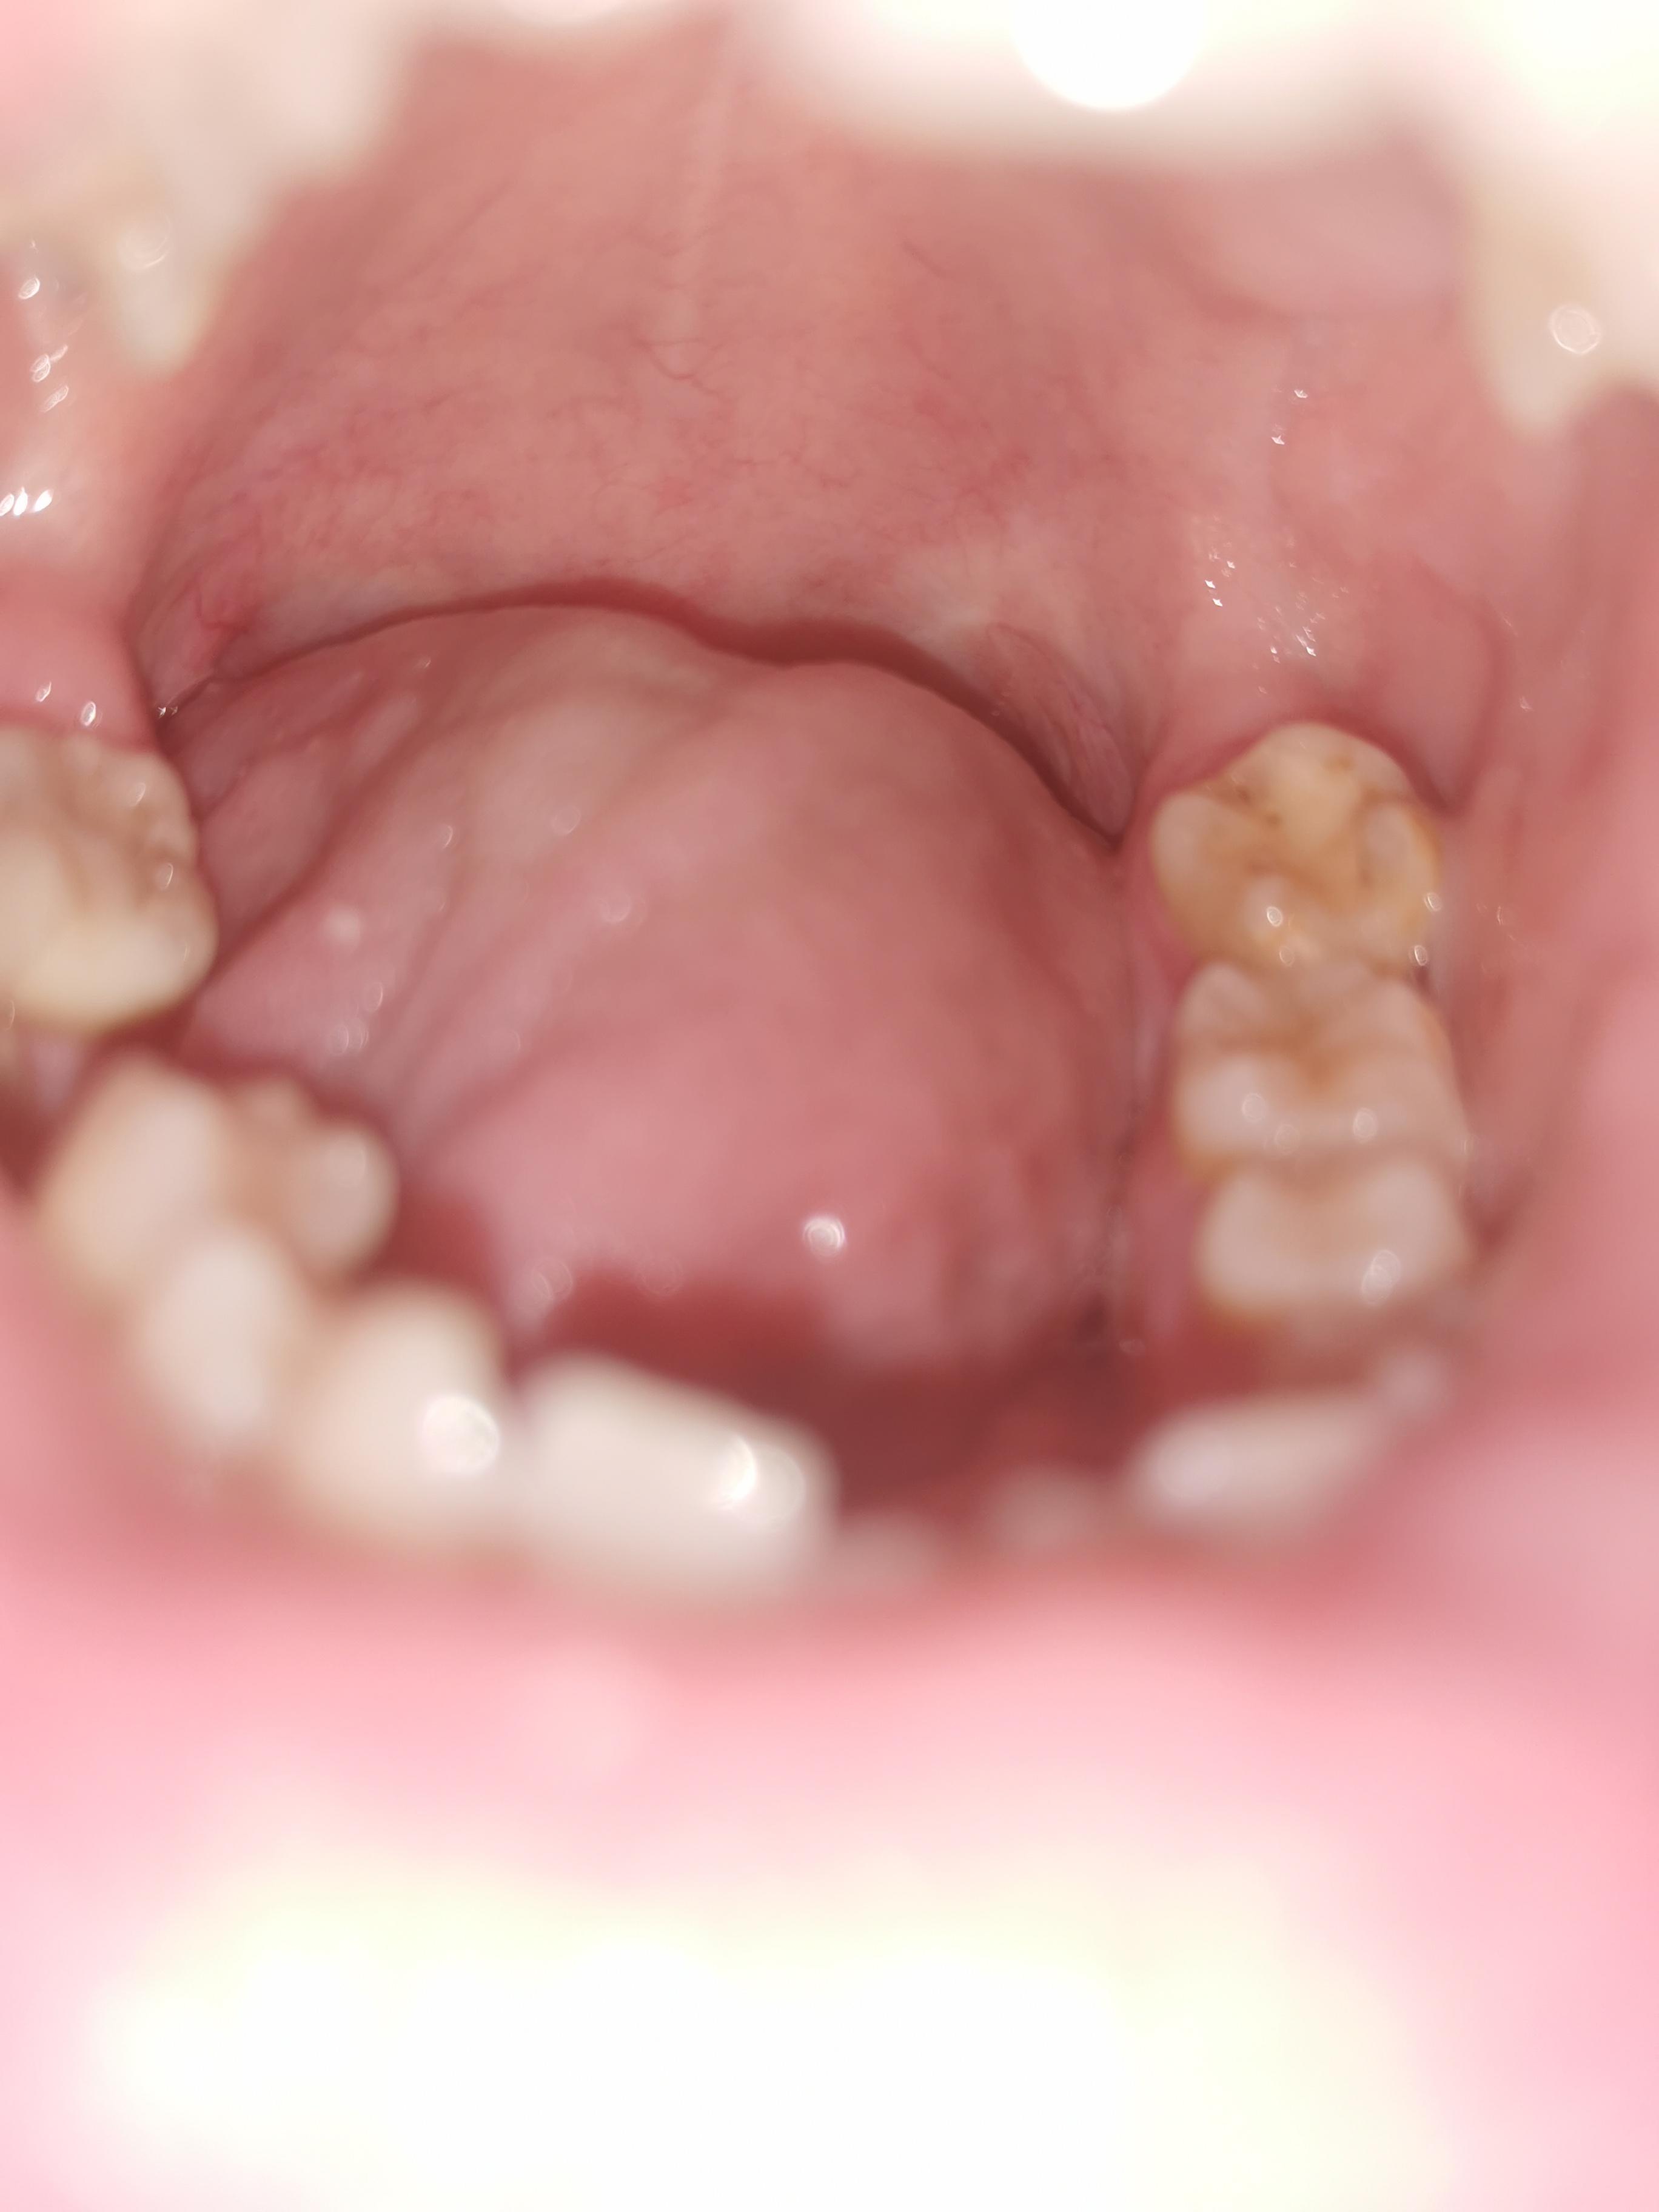 Hinterer Grosser Zahn Tut Weh Zahne Zahnarztbehandlung